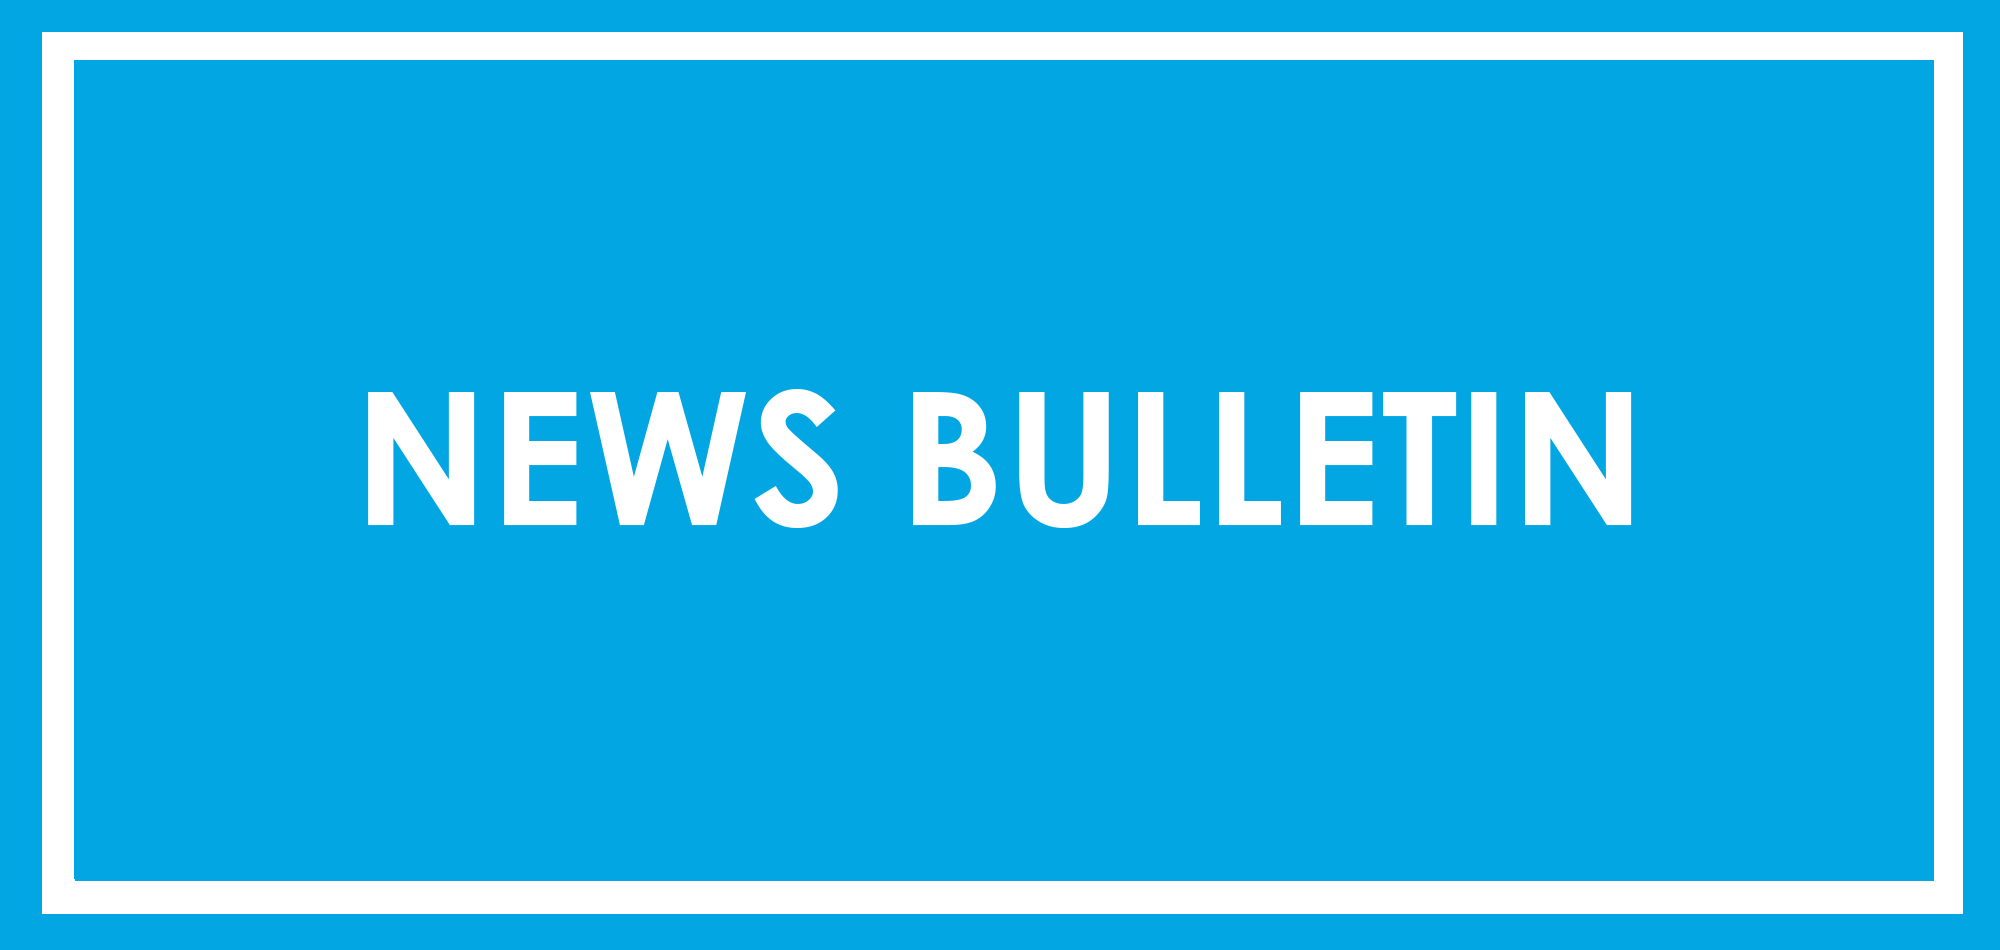 News Bulletin - 18.02.20